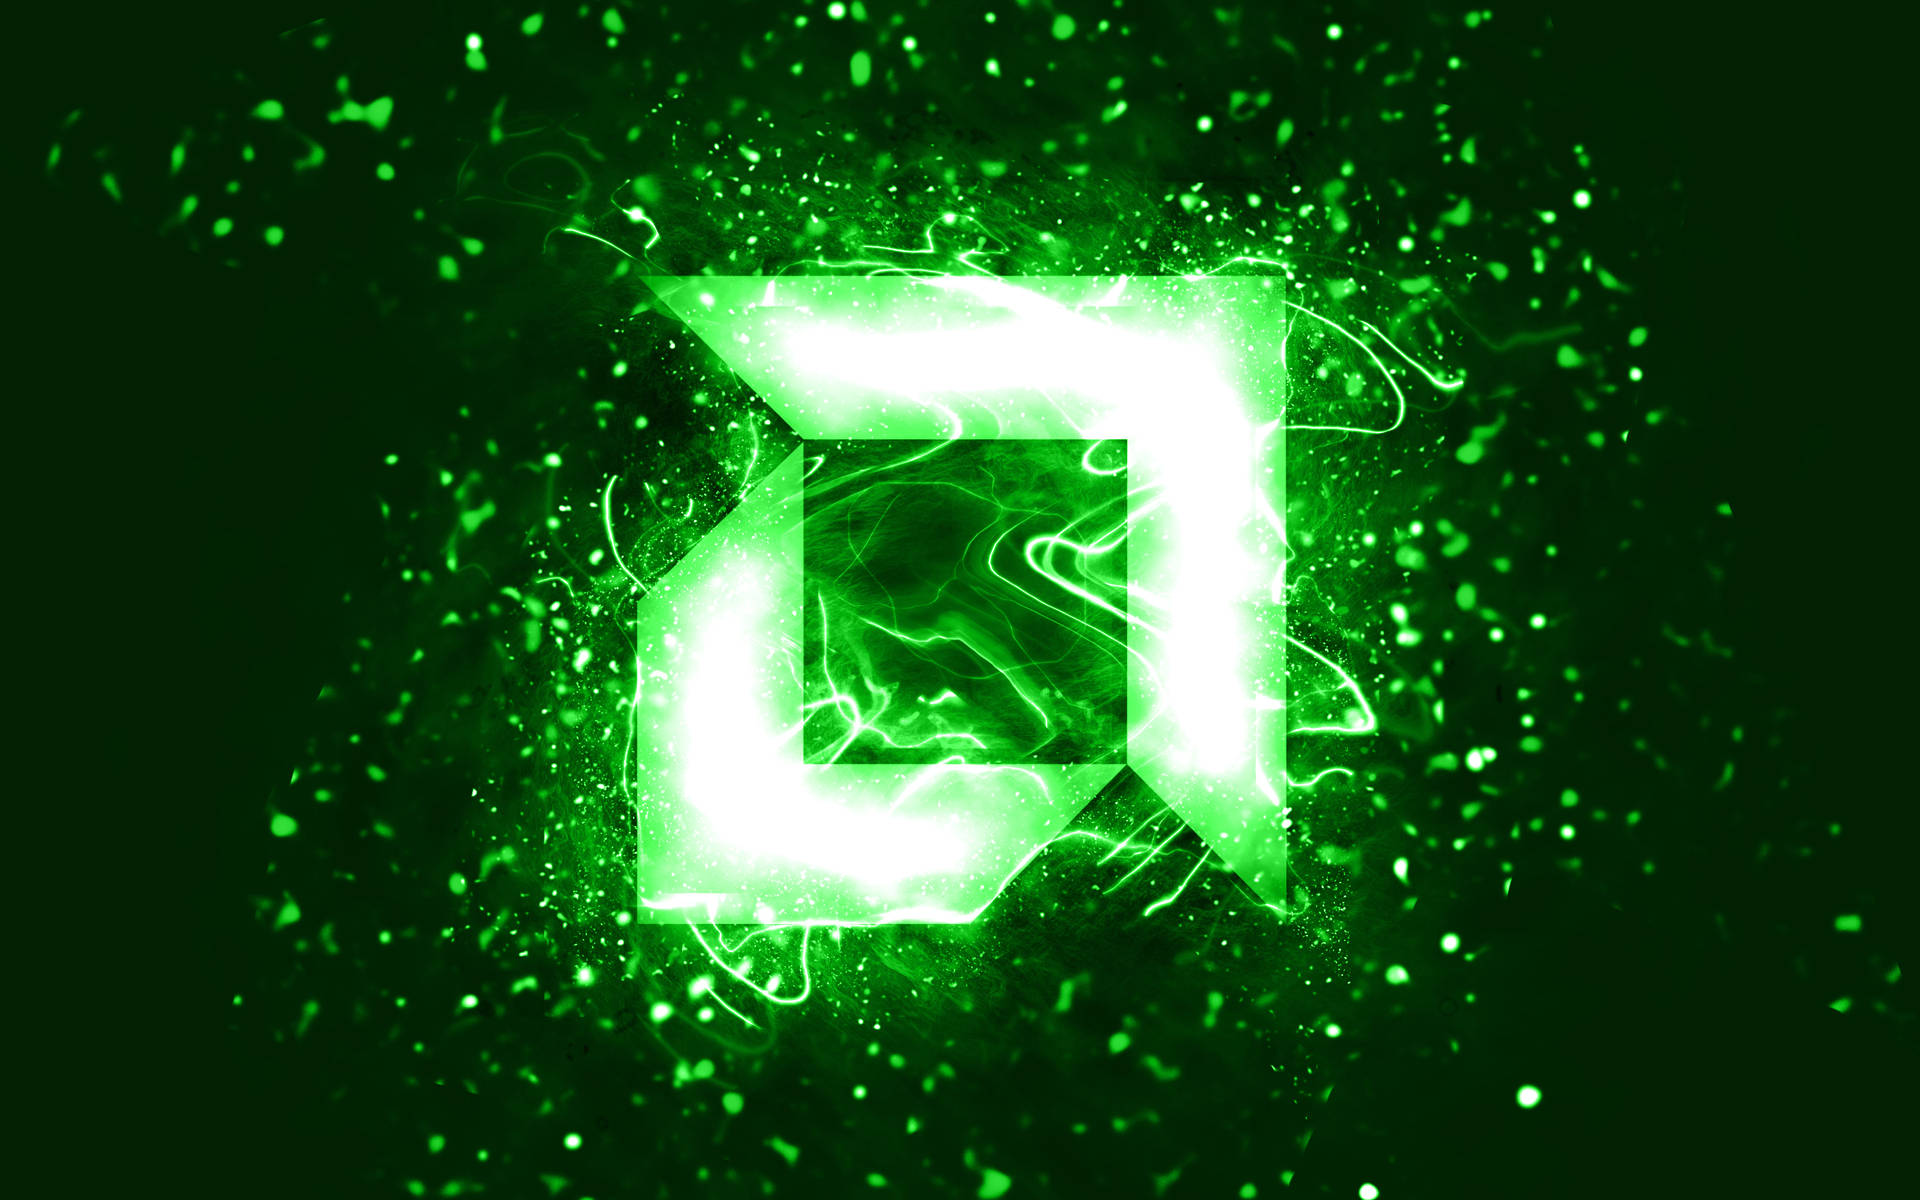 Amd's Vibrant Green Neon Logo Illuminating The Darkness.